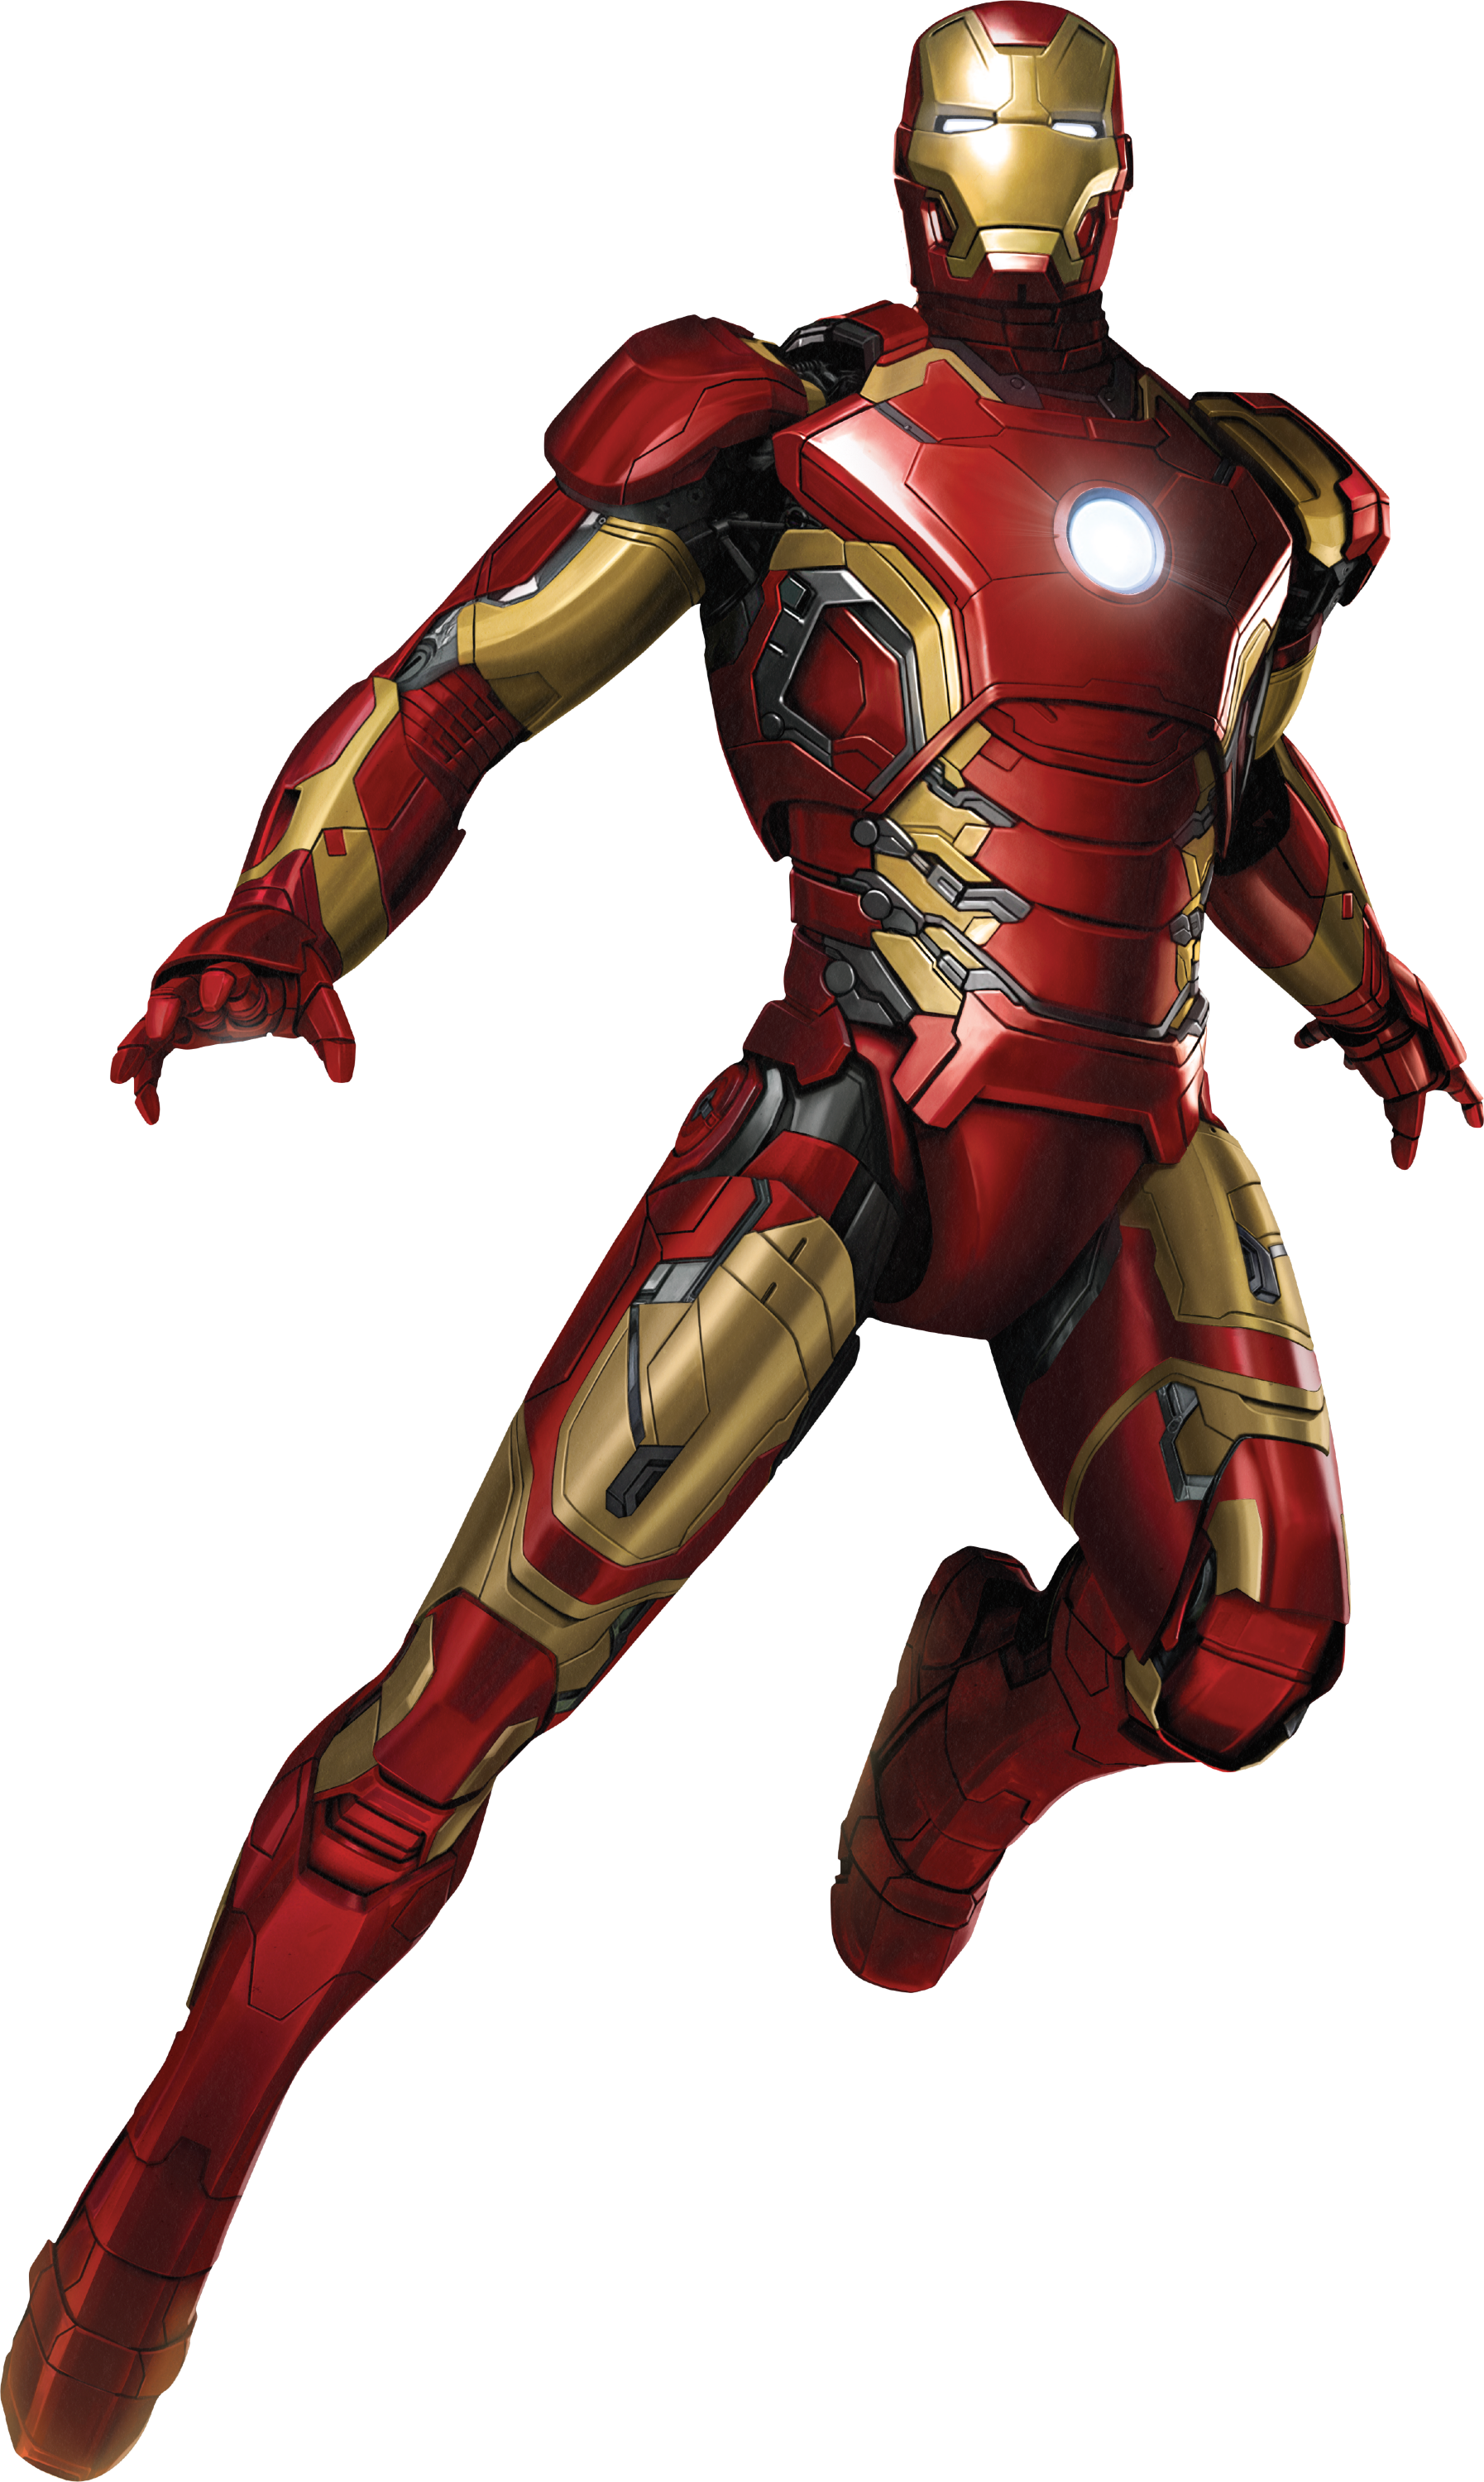 Increíble figura tamaño real de Iron Man - La Tercera